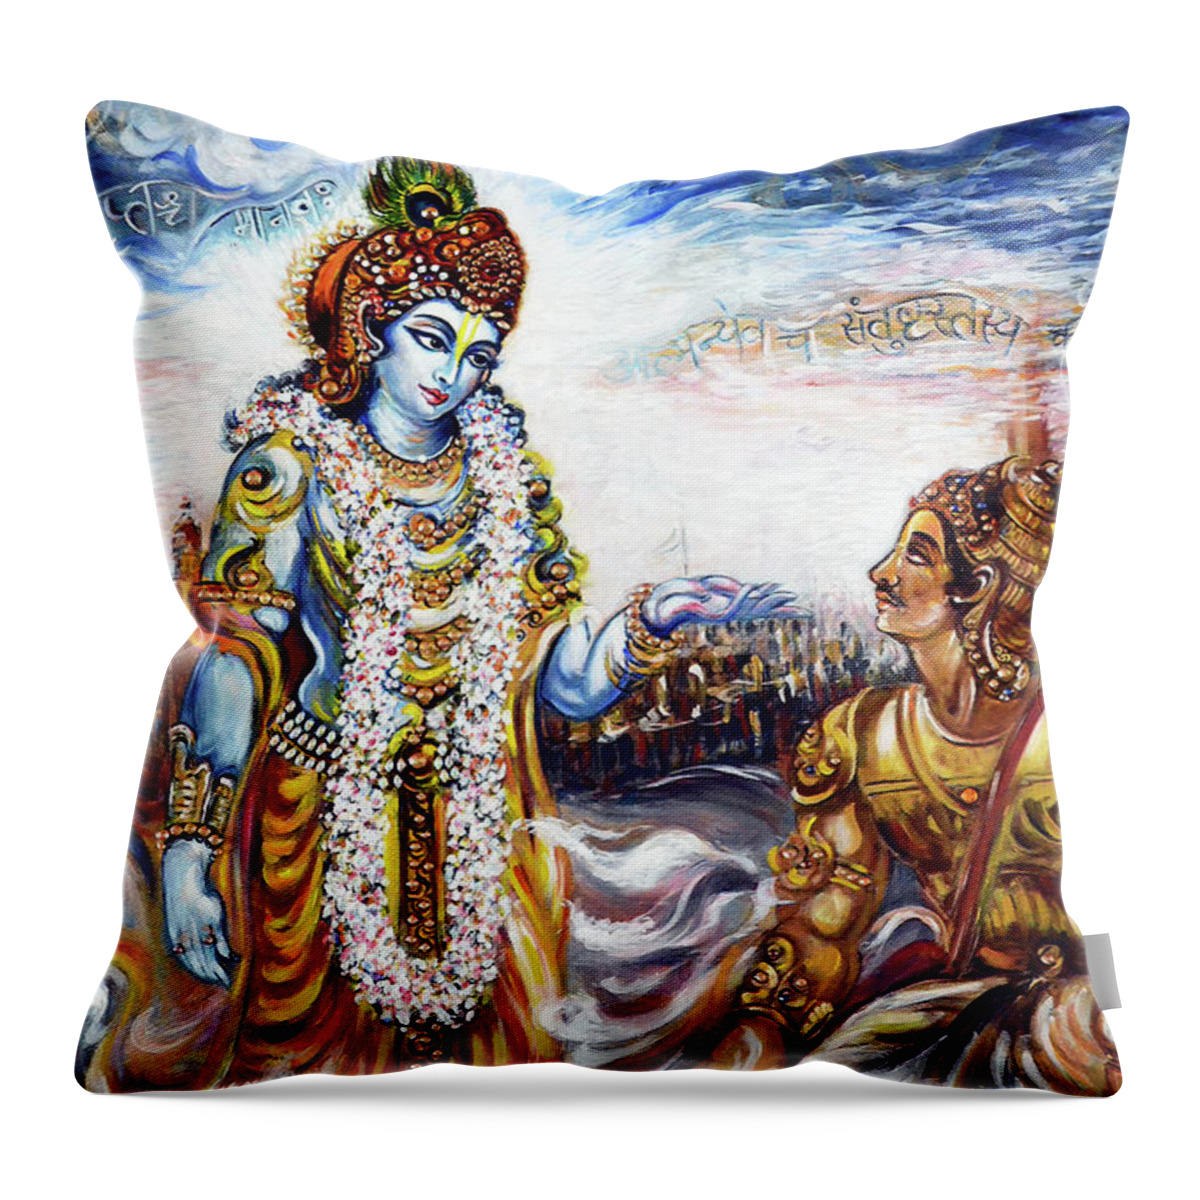 Krishna Throw Pillow featuring the painting Krishna - Arjuna - Bhagwat Geeta by Harsh Malik